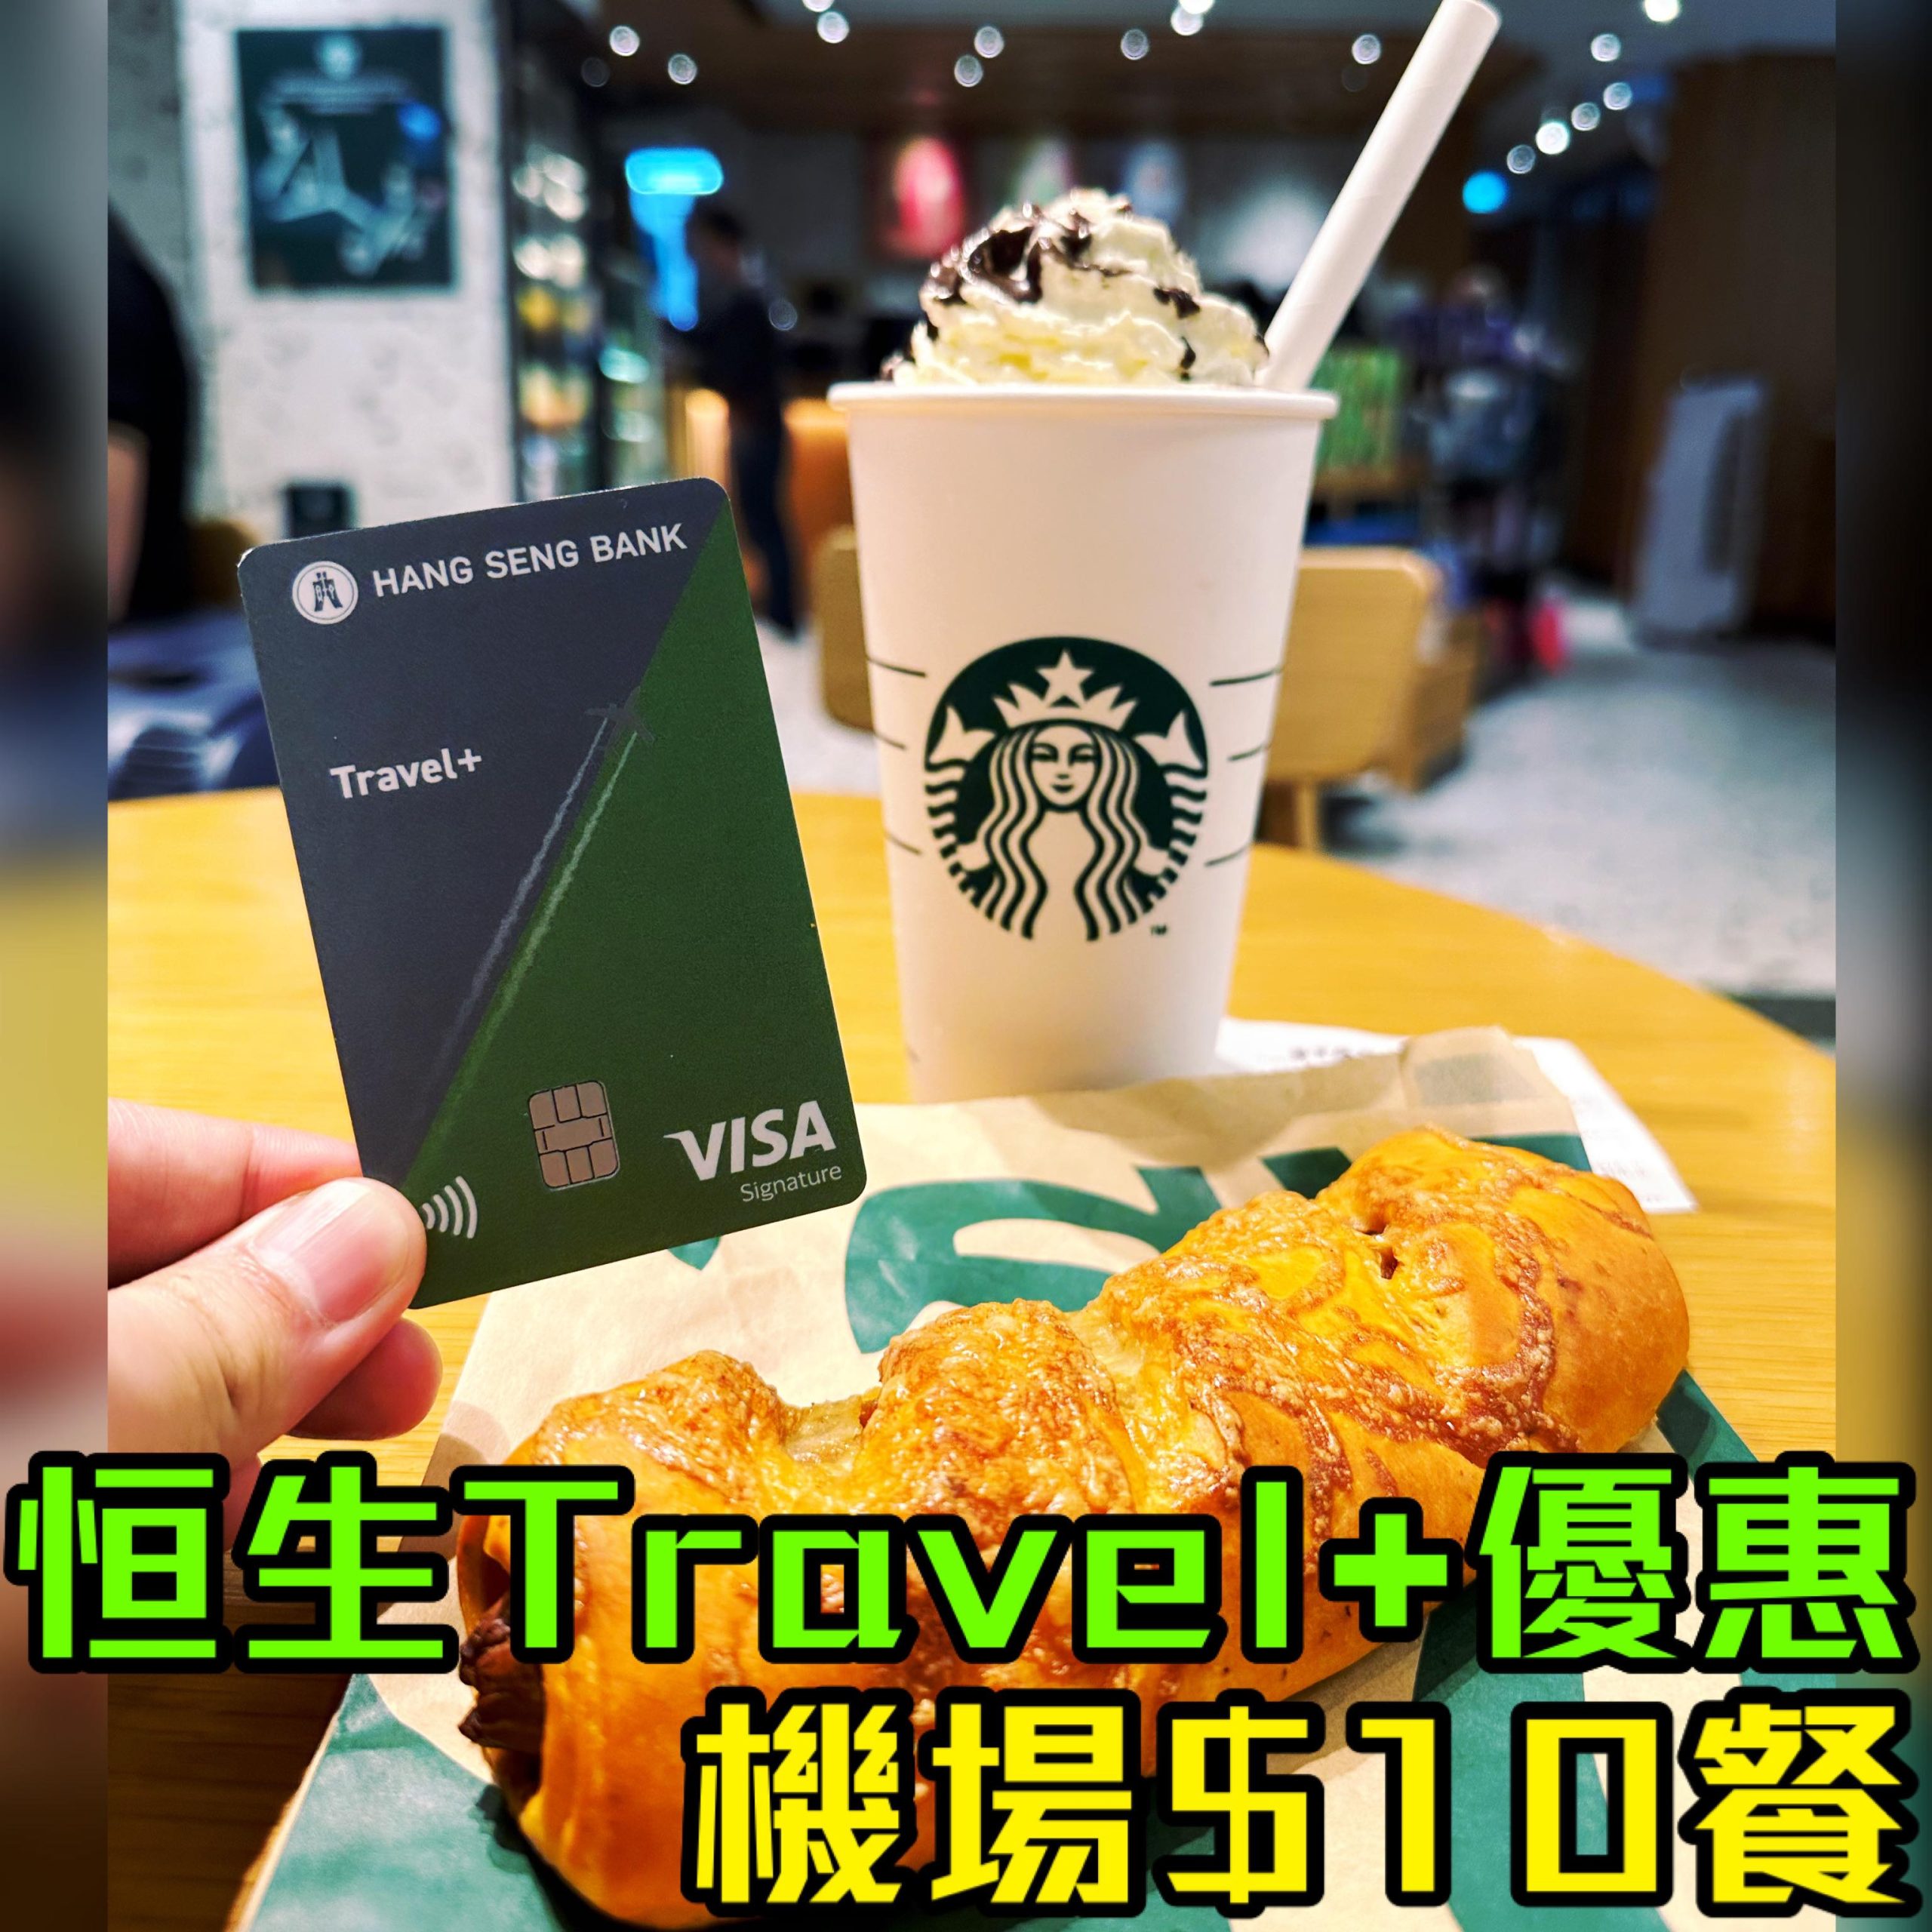 【恒生 Travel+ Starbucks優惠】Travel+ Visa Signature卡機場Starbucks HK$10咖啡套餐優惠！有嘢飲有嘢食！